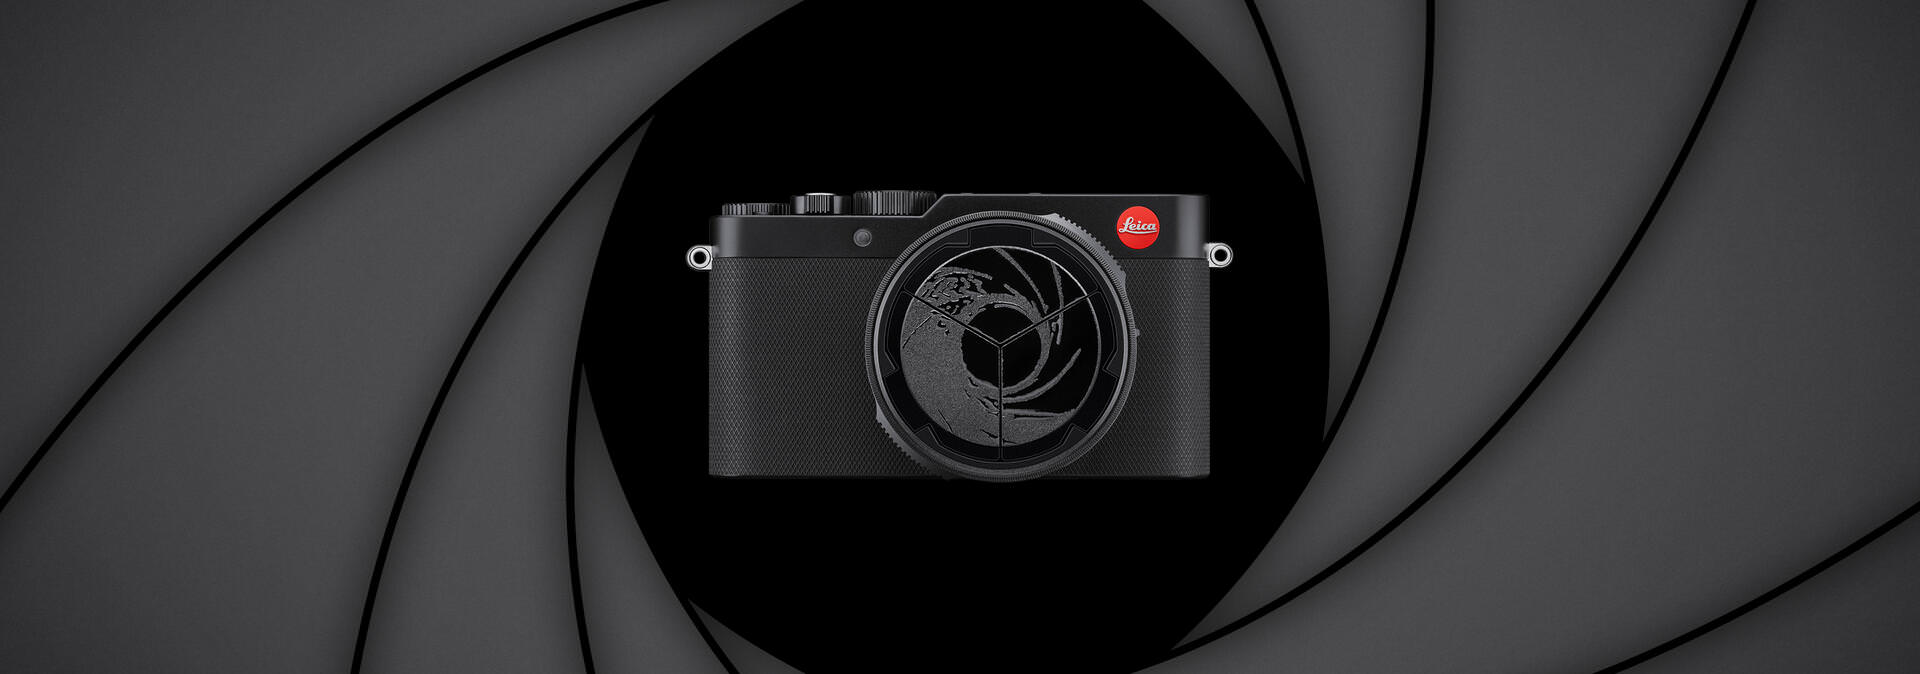 Leica D-lux 7 Accessories 